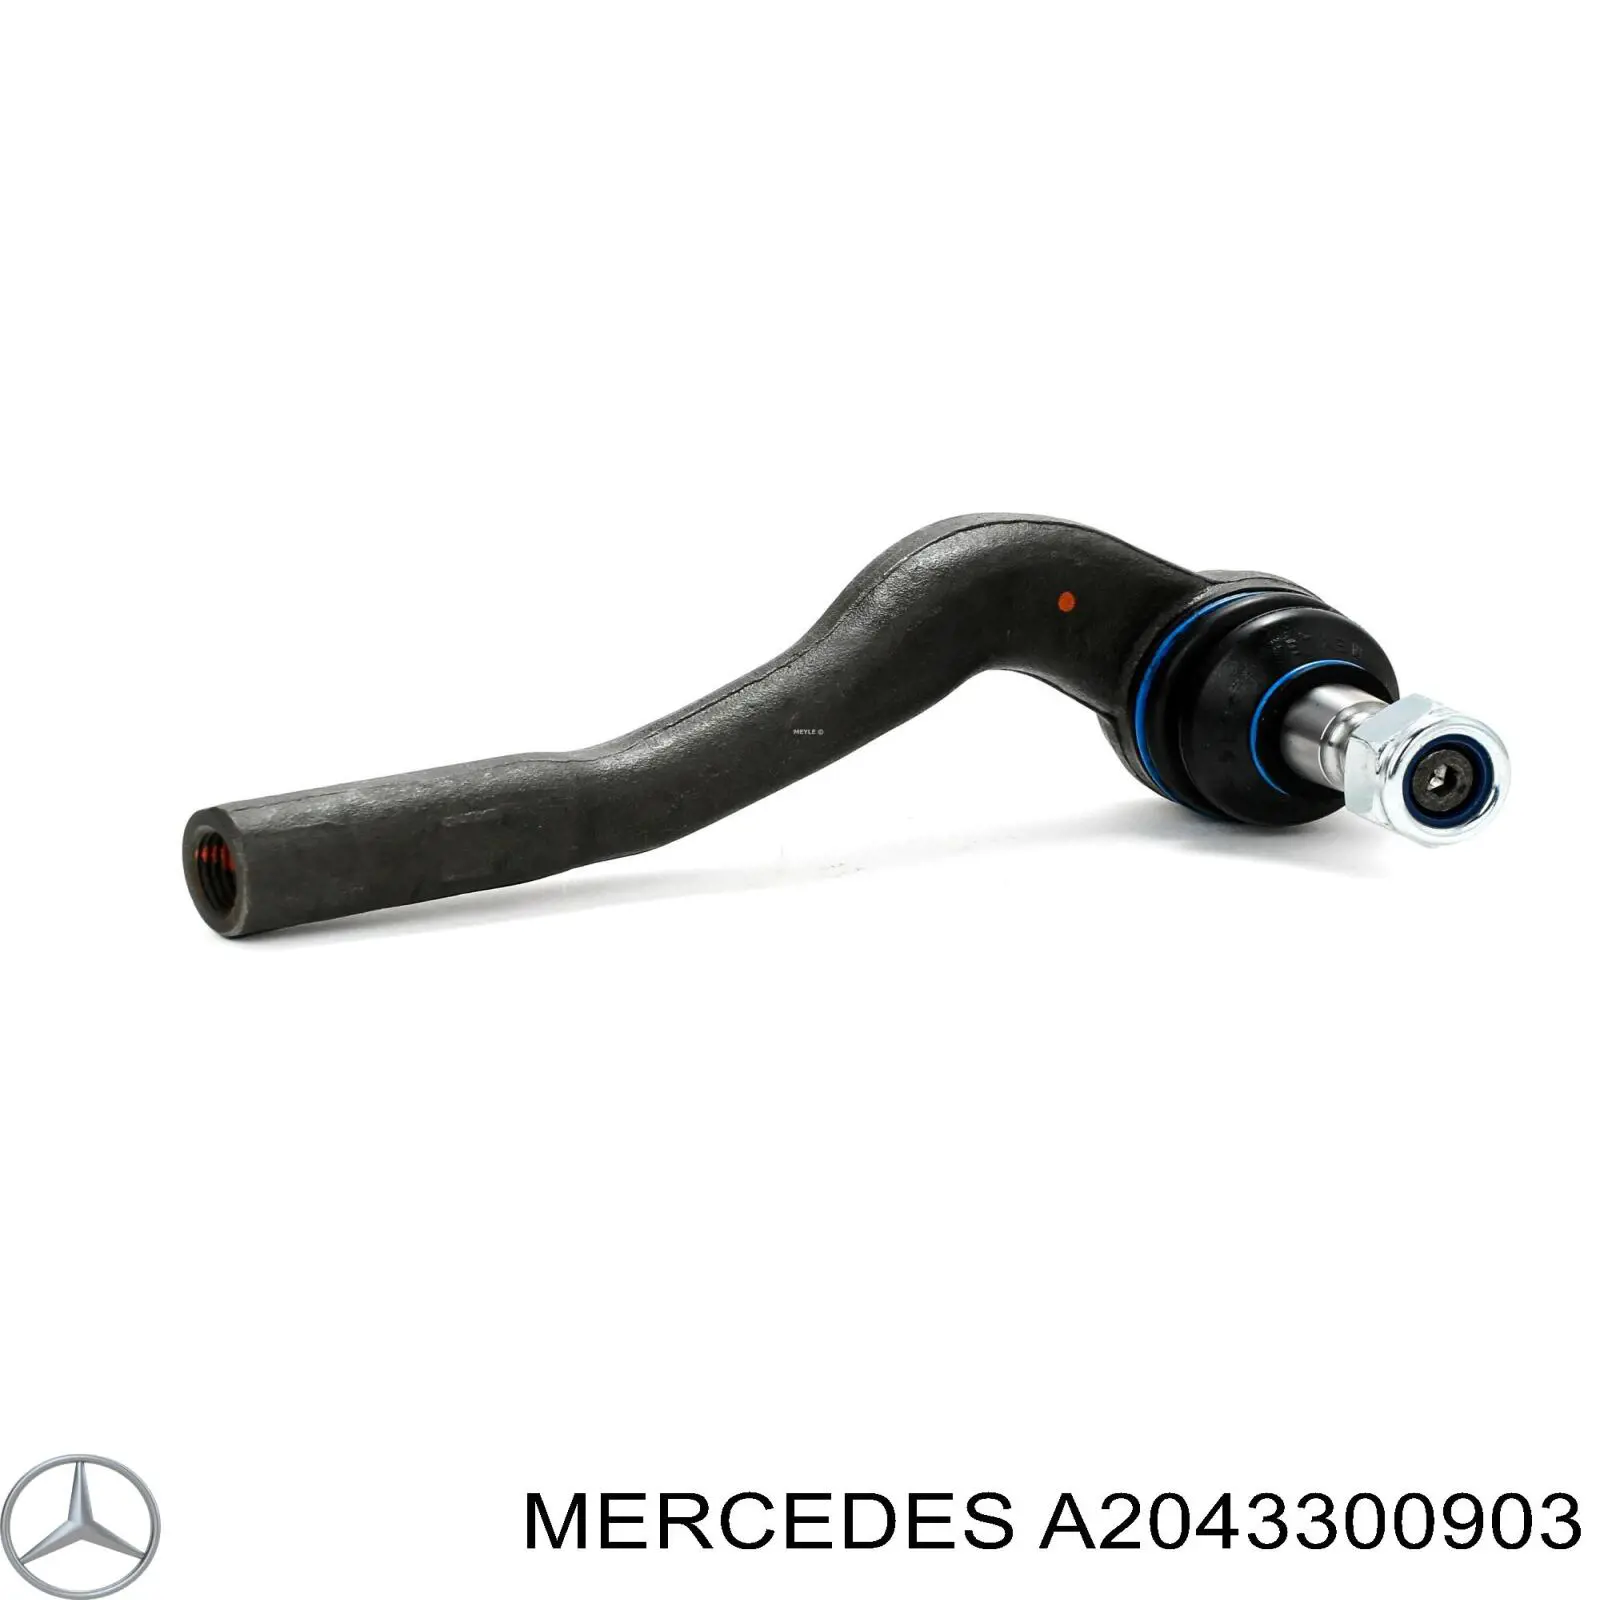 A2043300903 Mercedes rótula barra de acoplamiento exterior